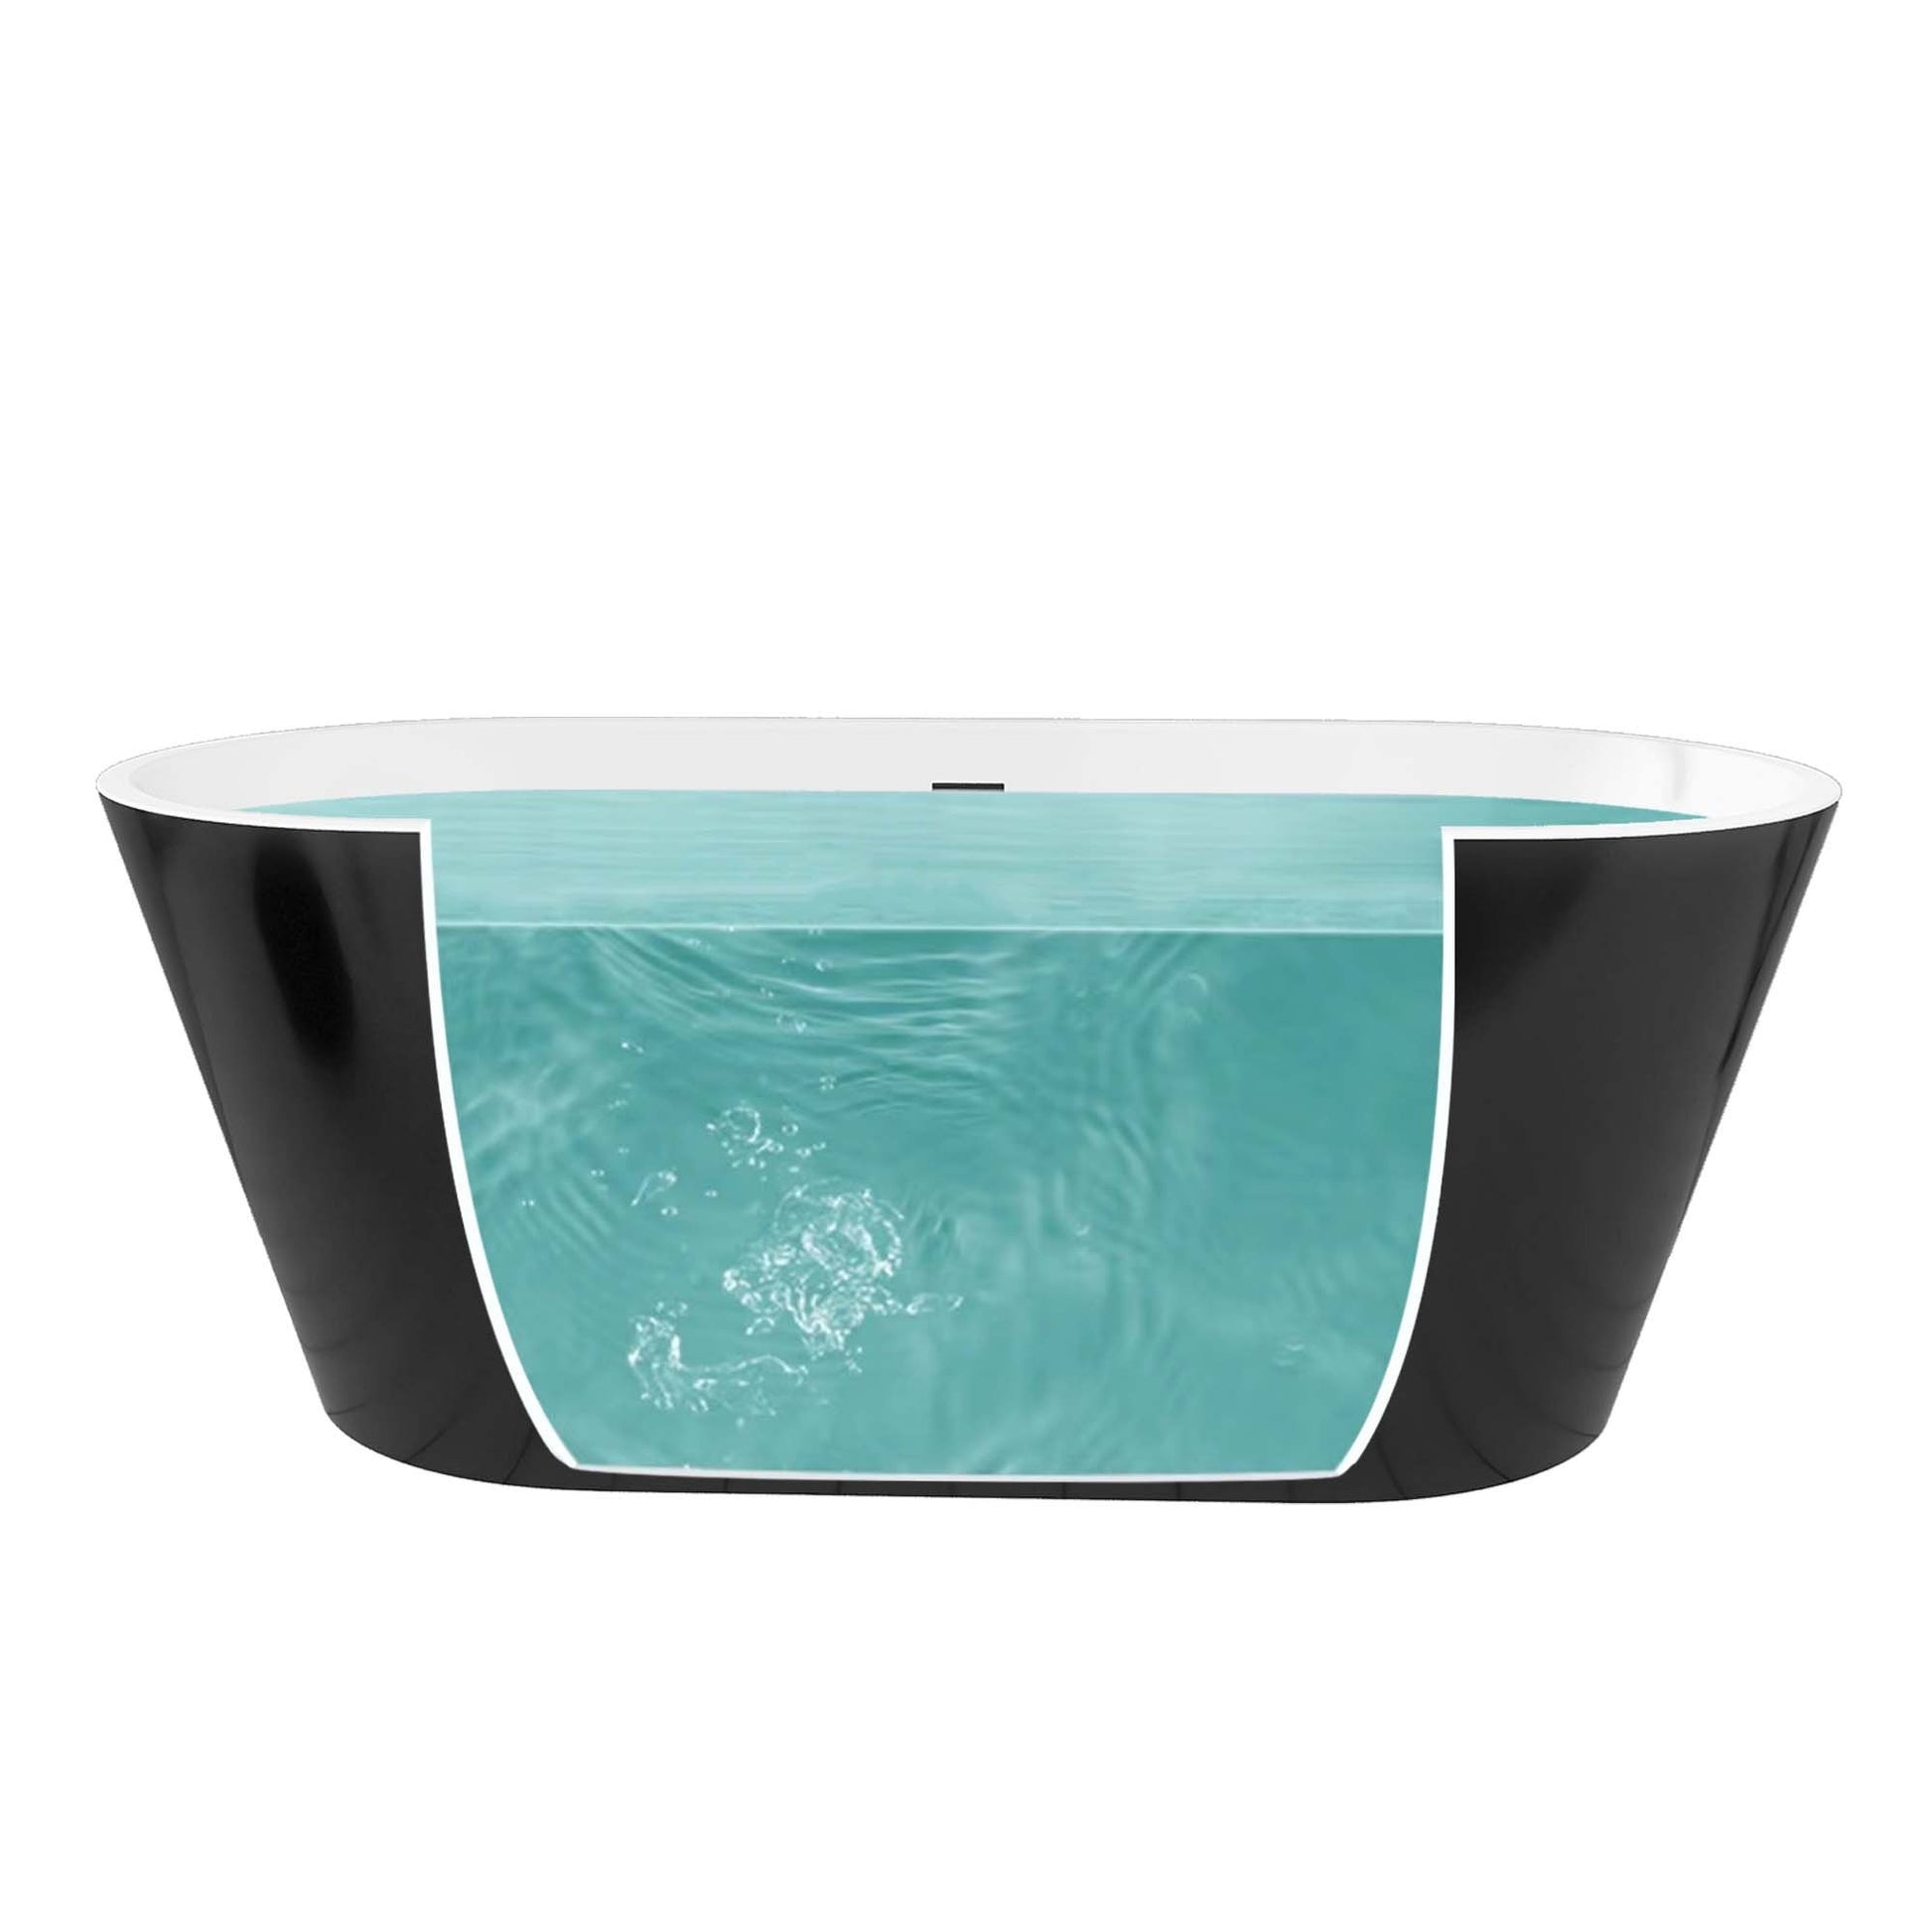 55" Acrylic Free Standing Tub Classic Oval Shape black-oval-bathroom-freestanding